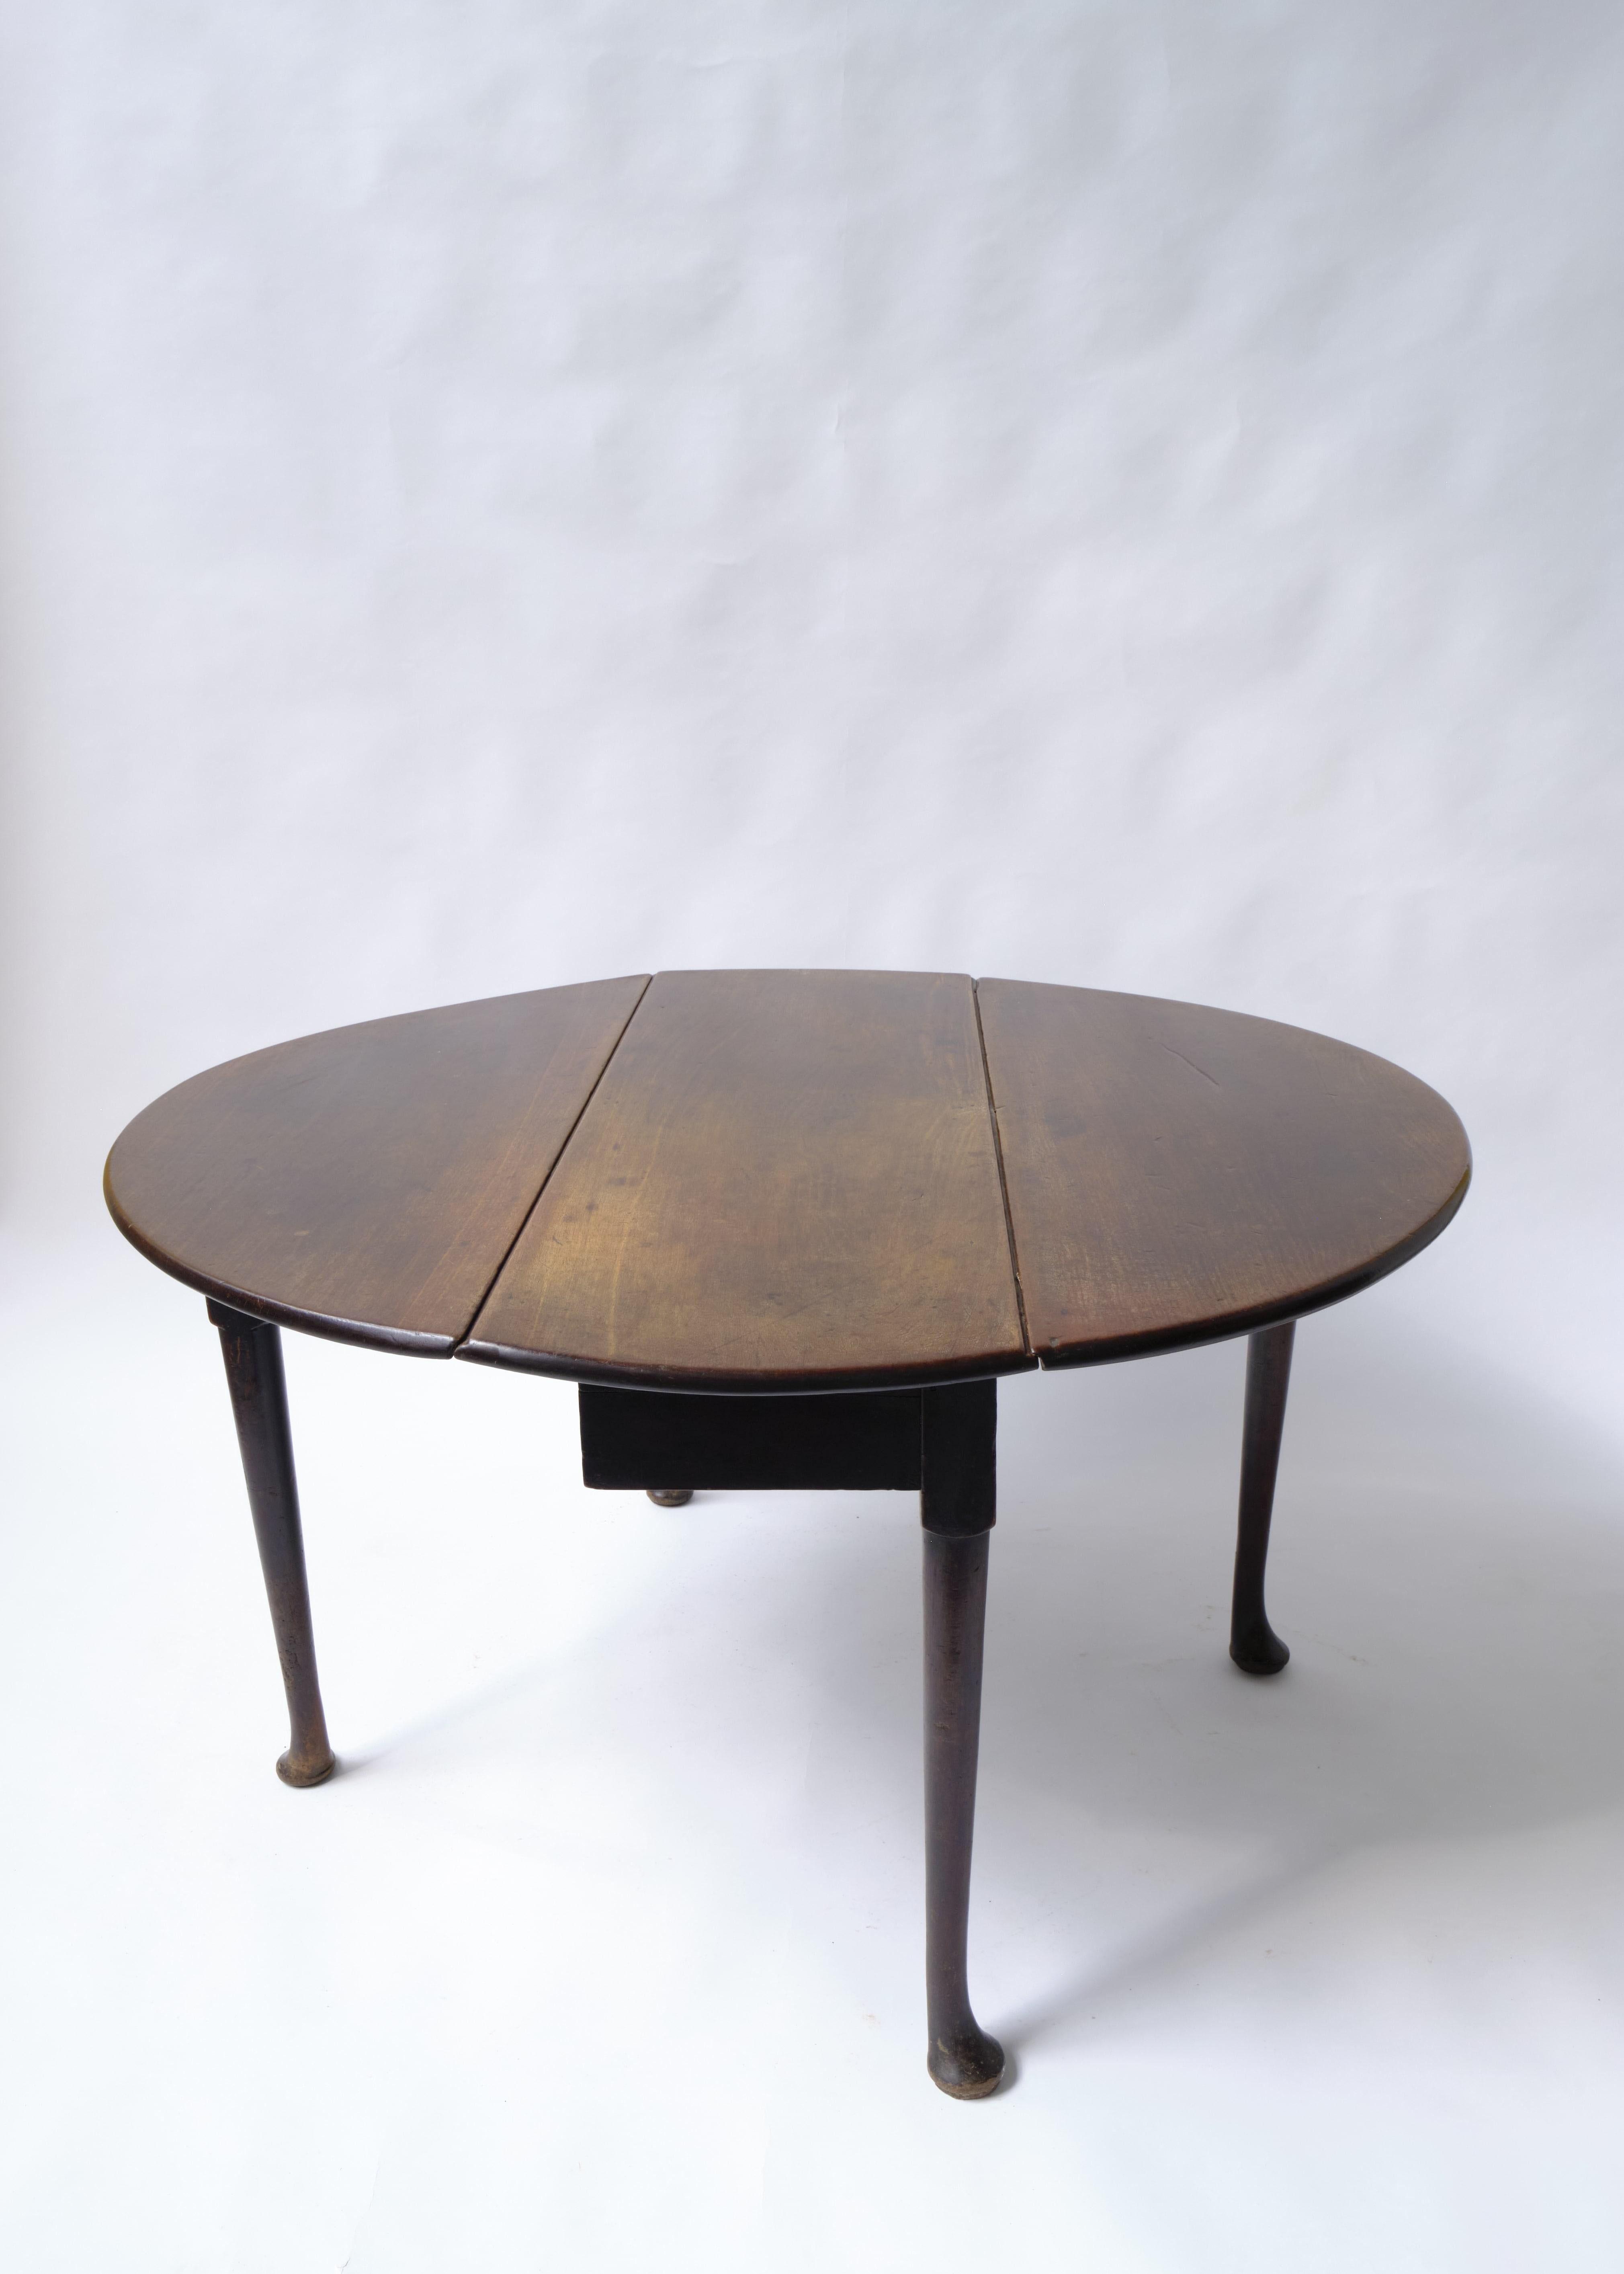 Mid-18th Century Georgian Drop Leaf Oval Breakfast Table 18th Century English Mahogany For Sale